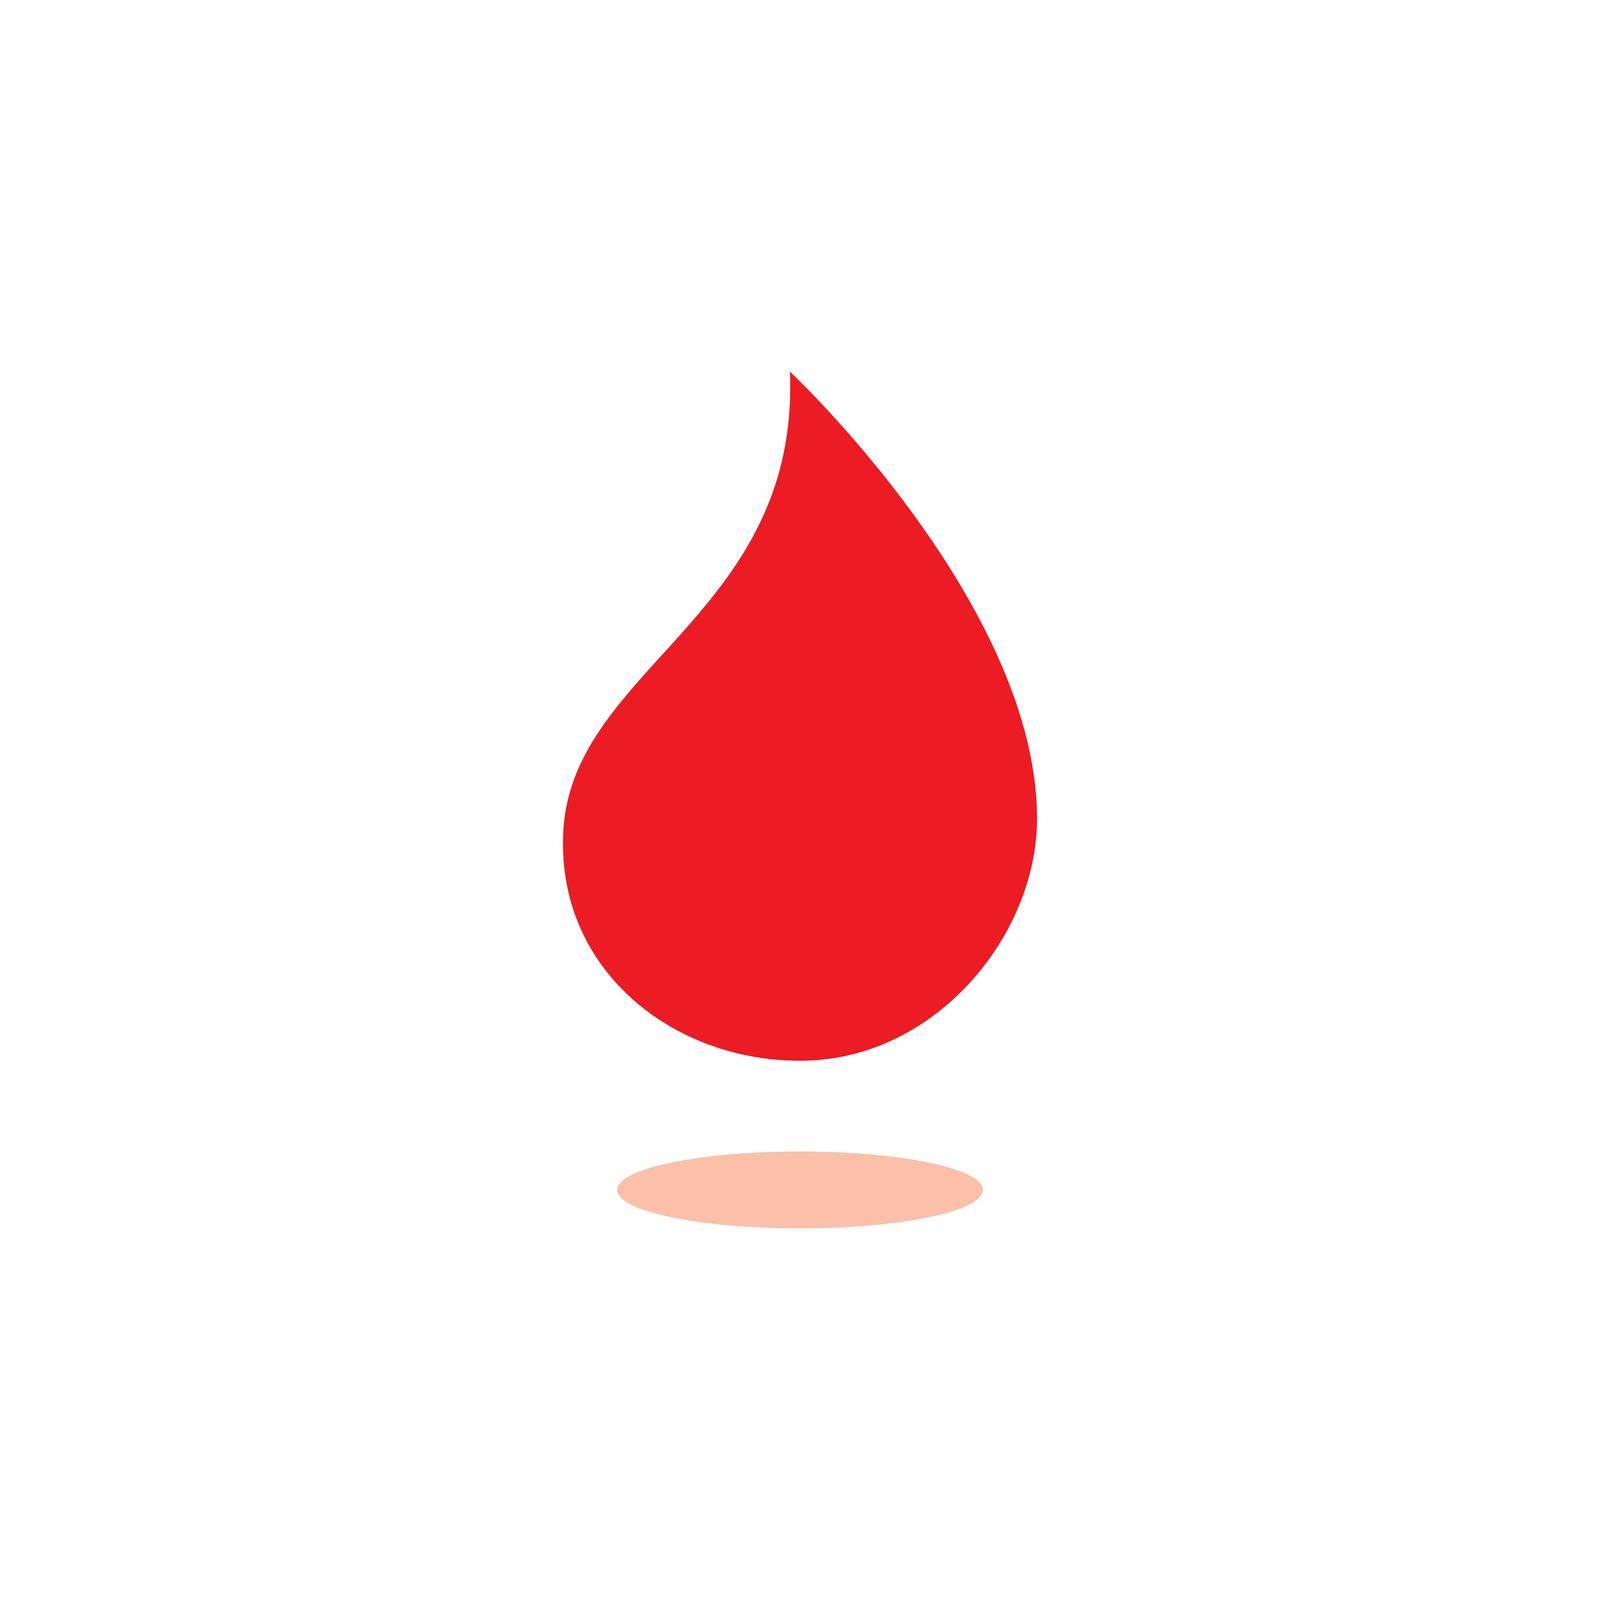 Blood ilustration logo by awk